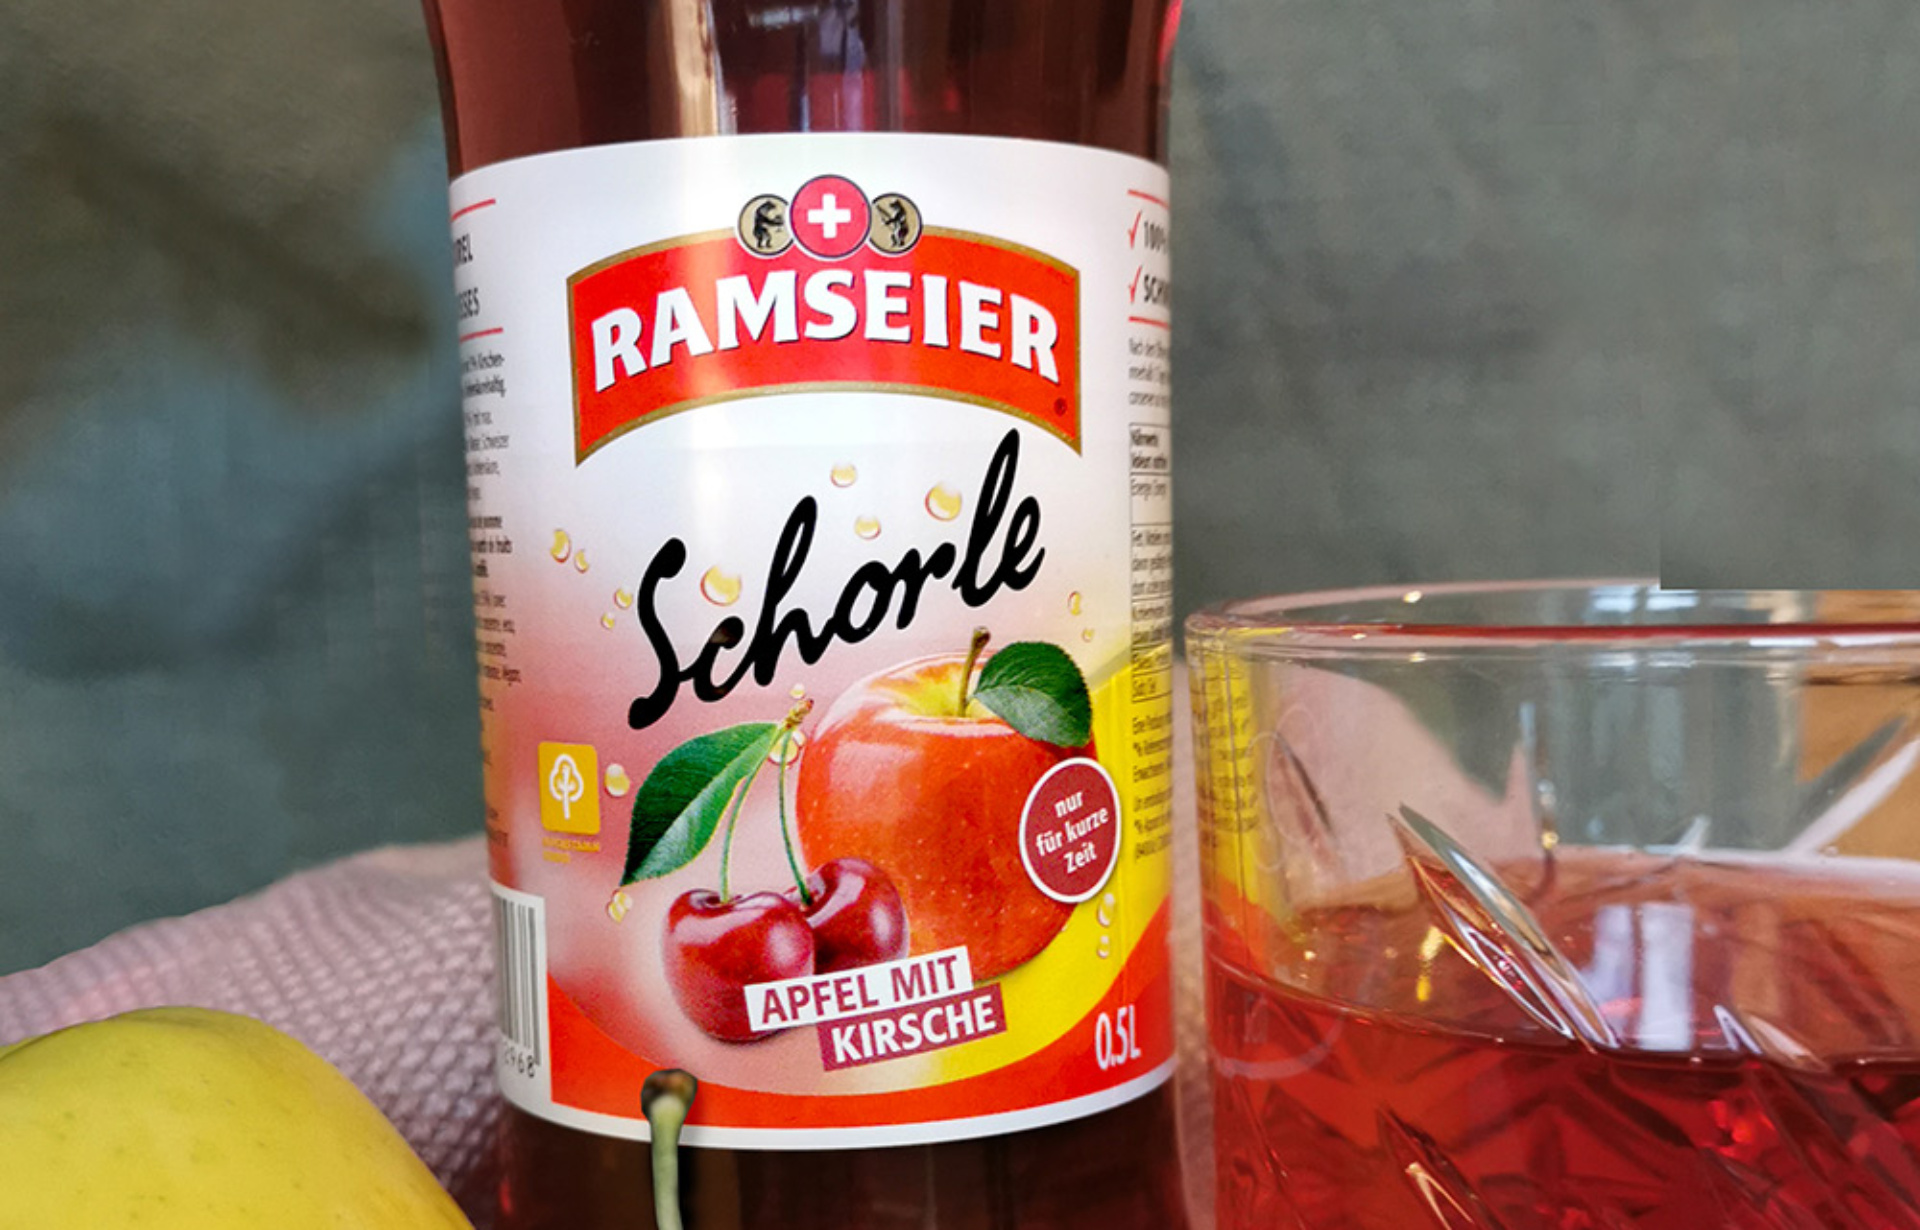 NEU: RAMSEIER Schorle Apfel Kirsche (saisonal) | RAMSEIER Suisse AG